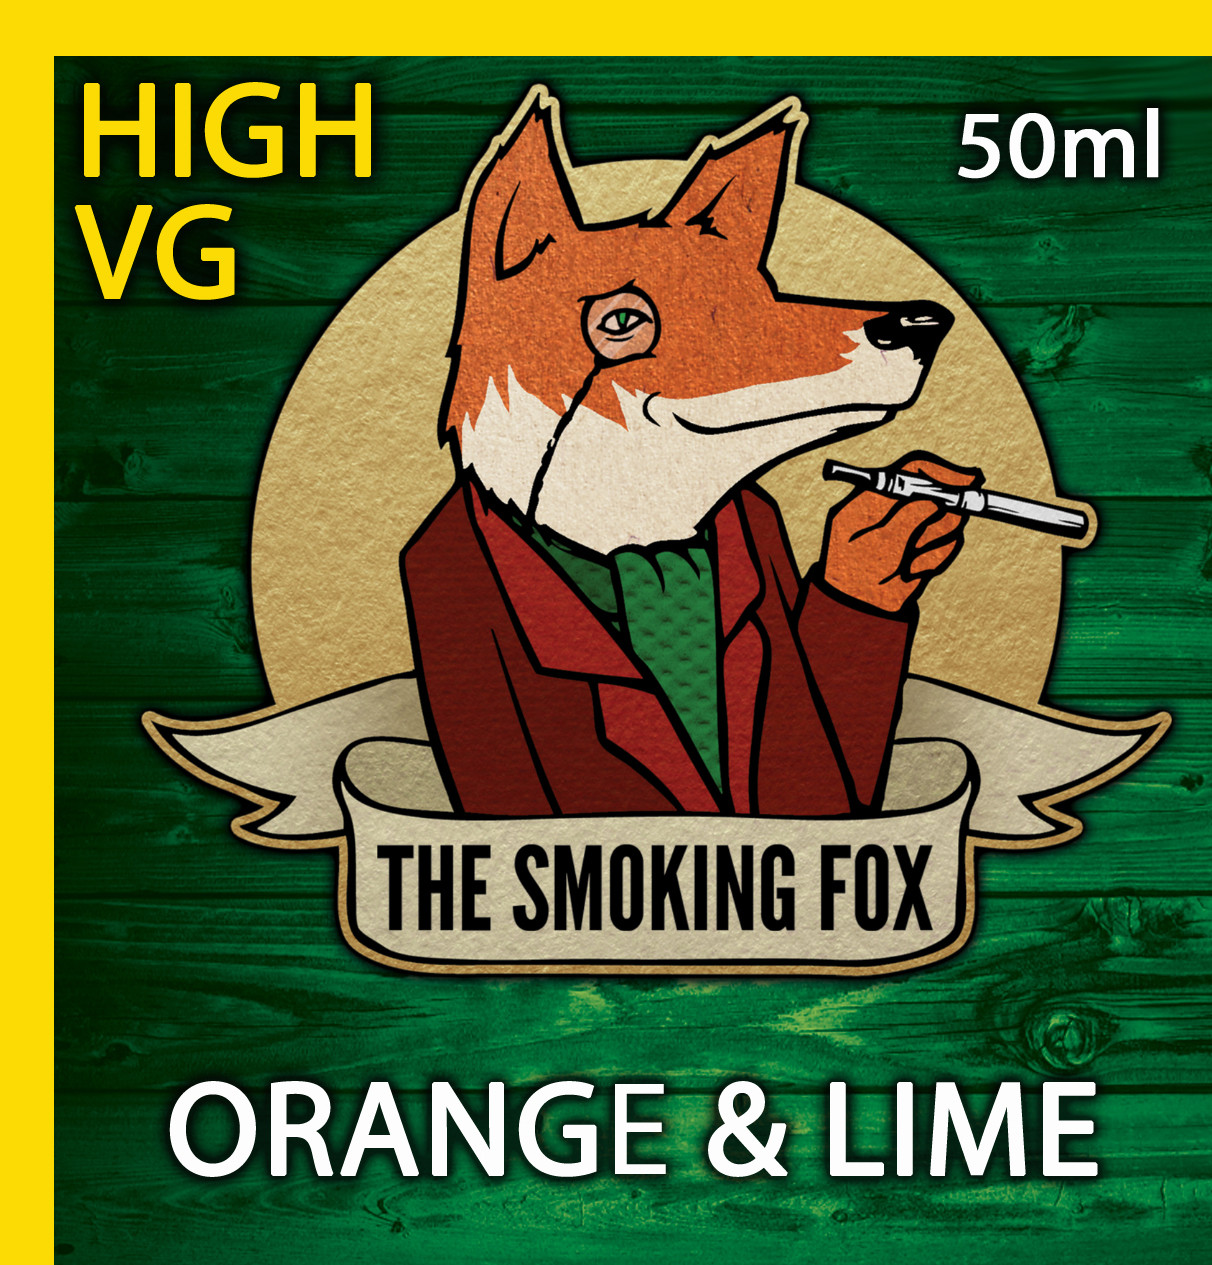 THE SMOKING FOX 50ml HIGH VG - ORANGE & LIME